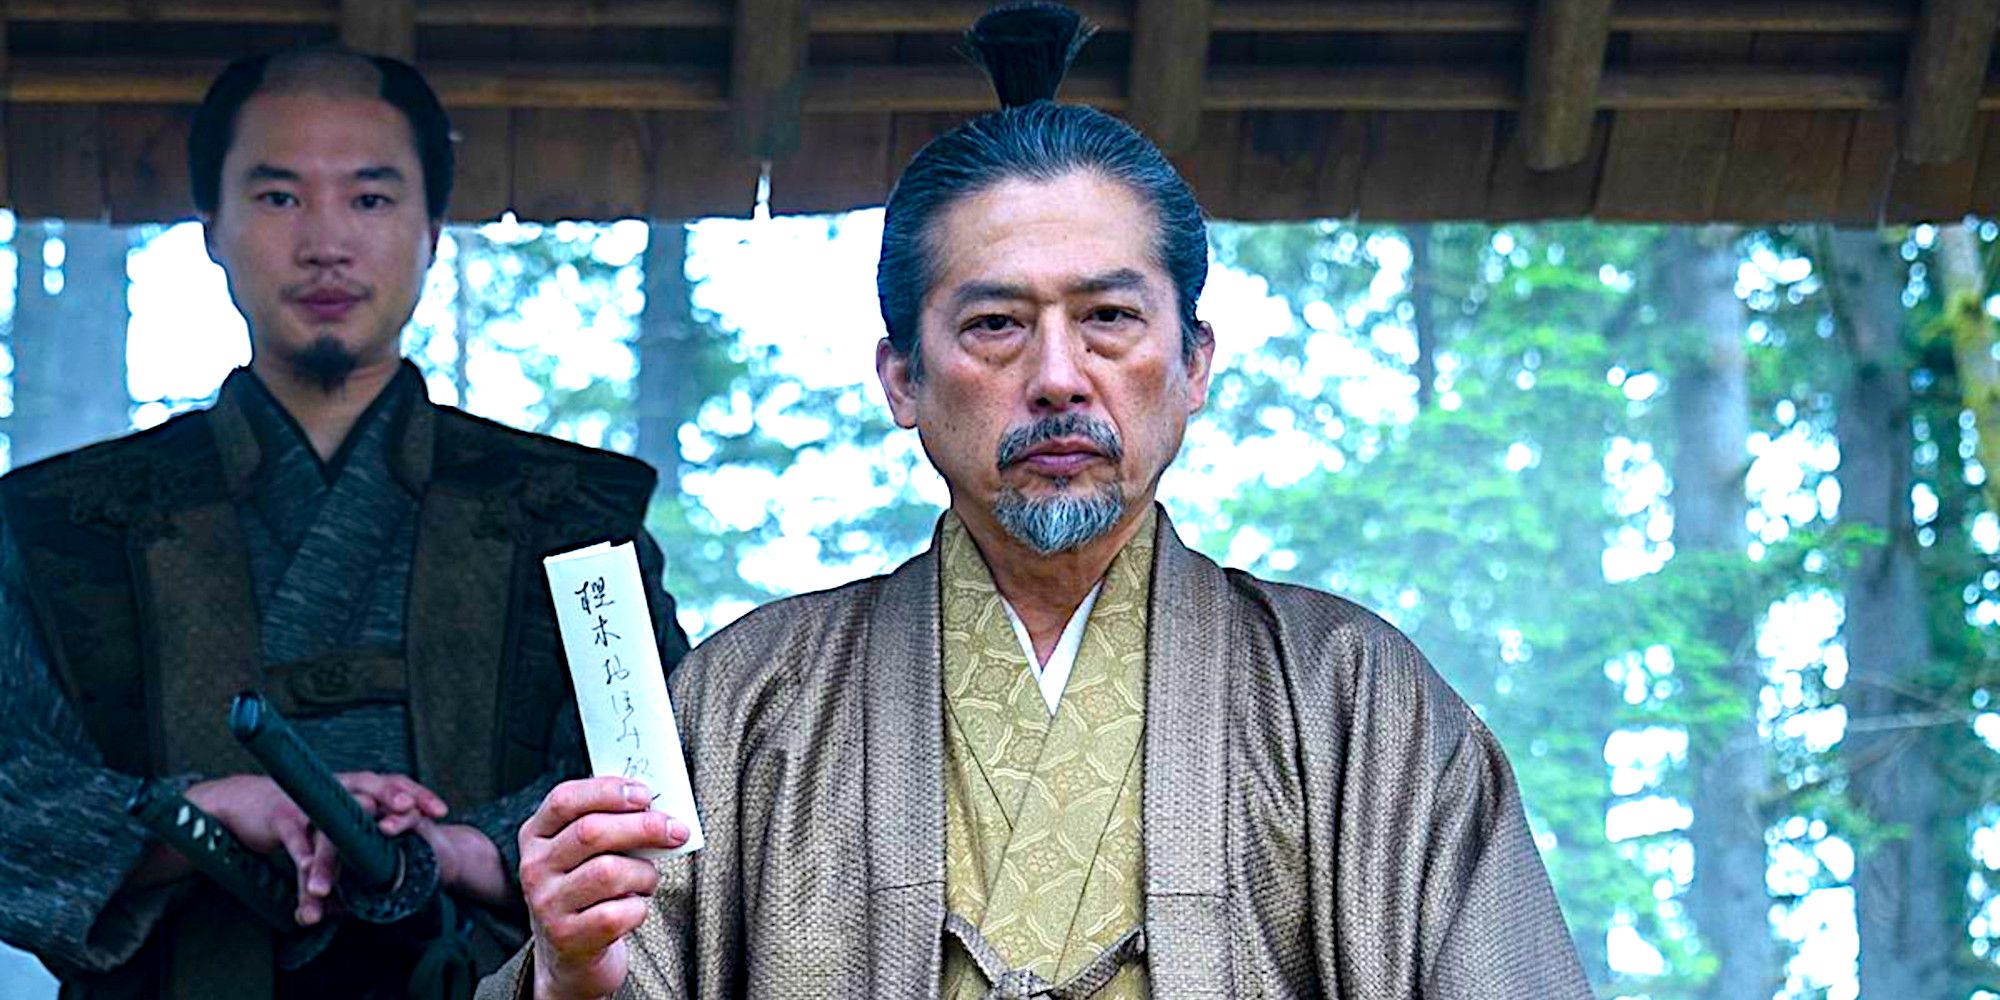 Toranaga holds up a document in a scene from Shogun episode 10